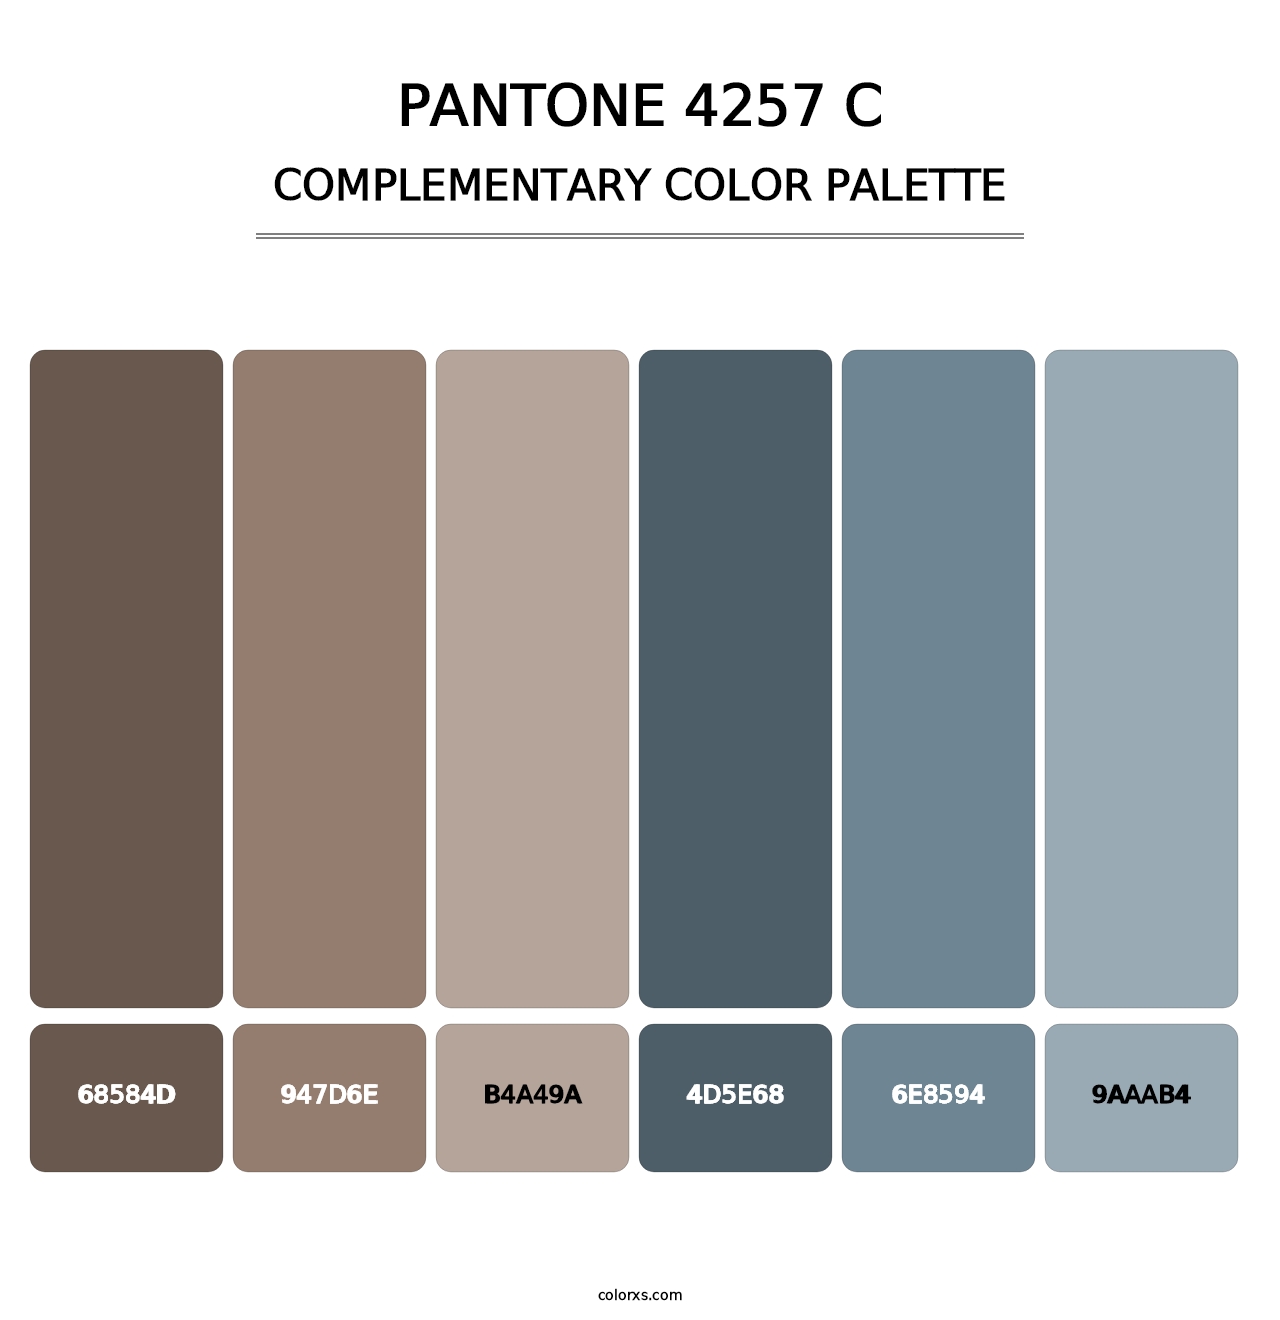 PANTONE 4257 C - Complementary Color Palette